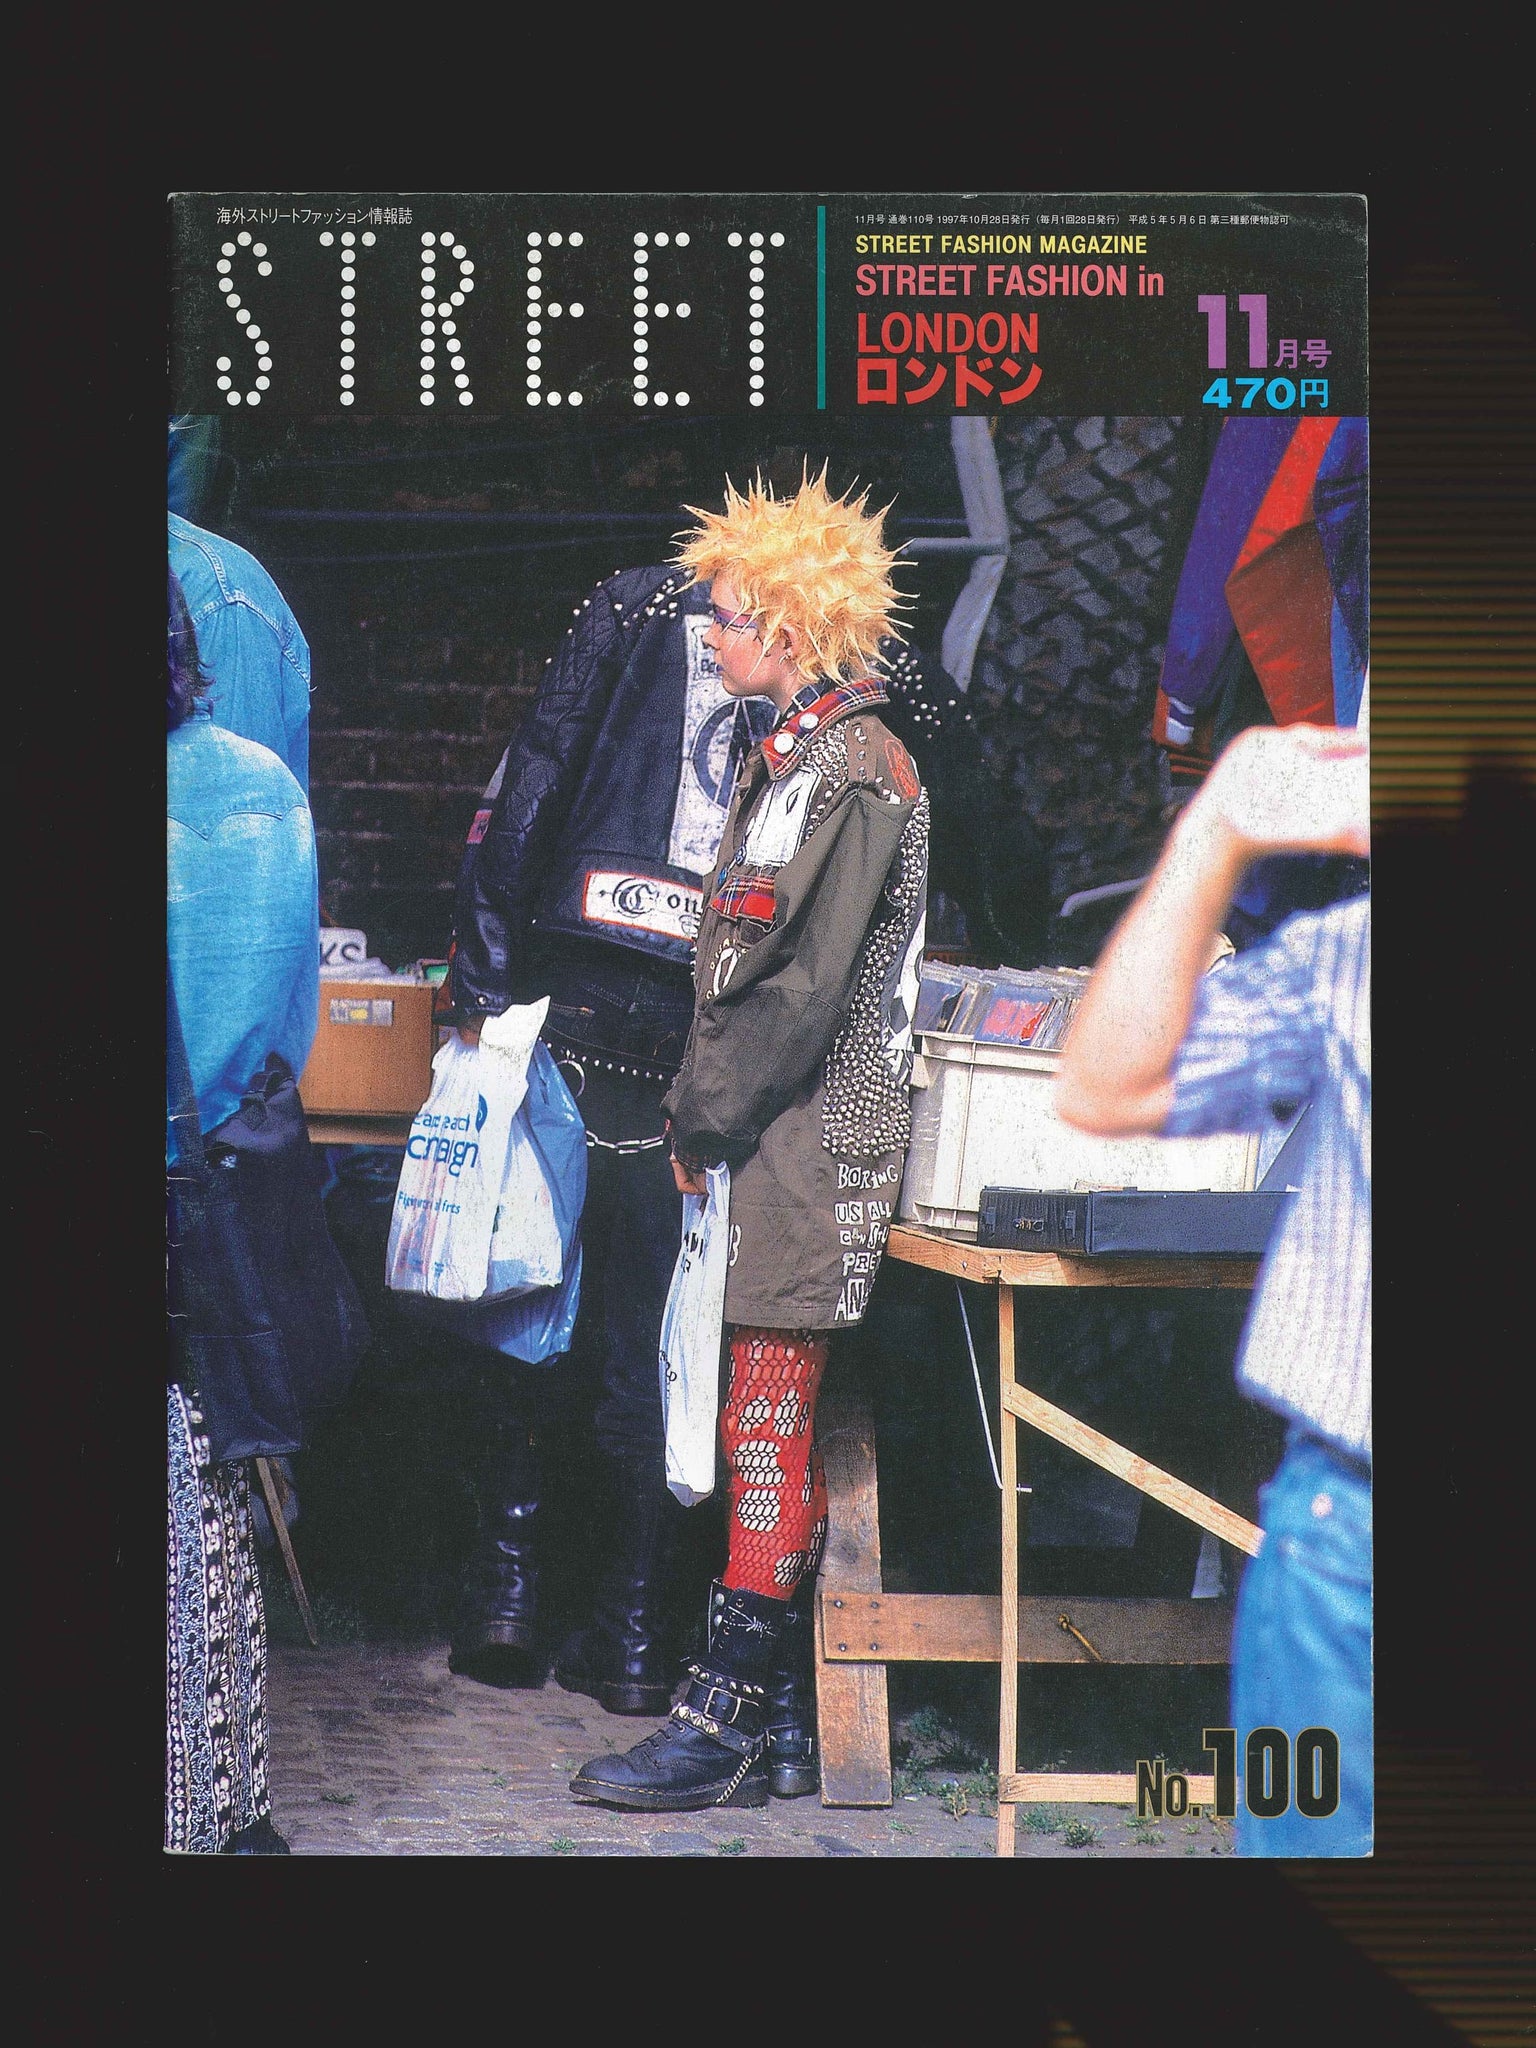 STREET magazine no. 100 / november 1997 / fashion in london - Shoichi Aoki